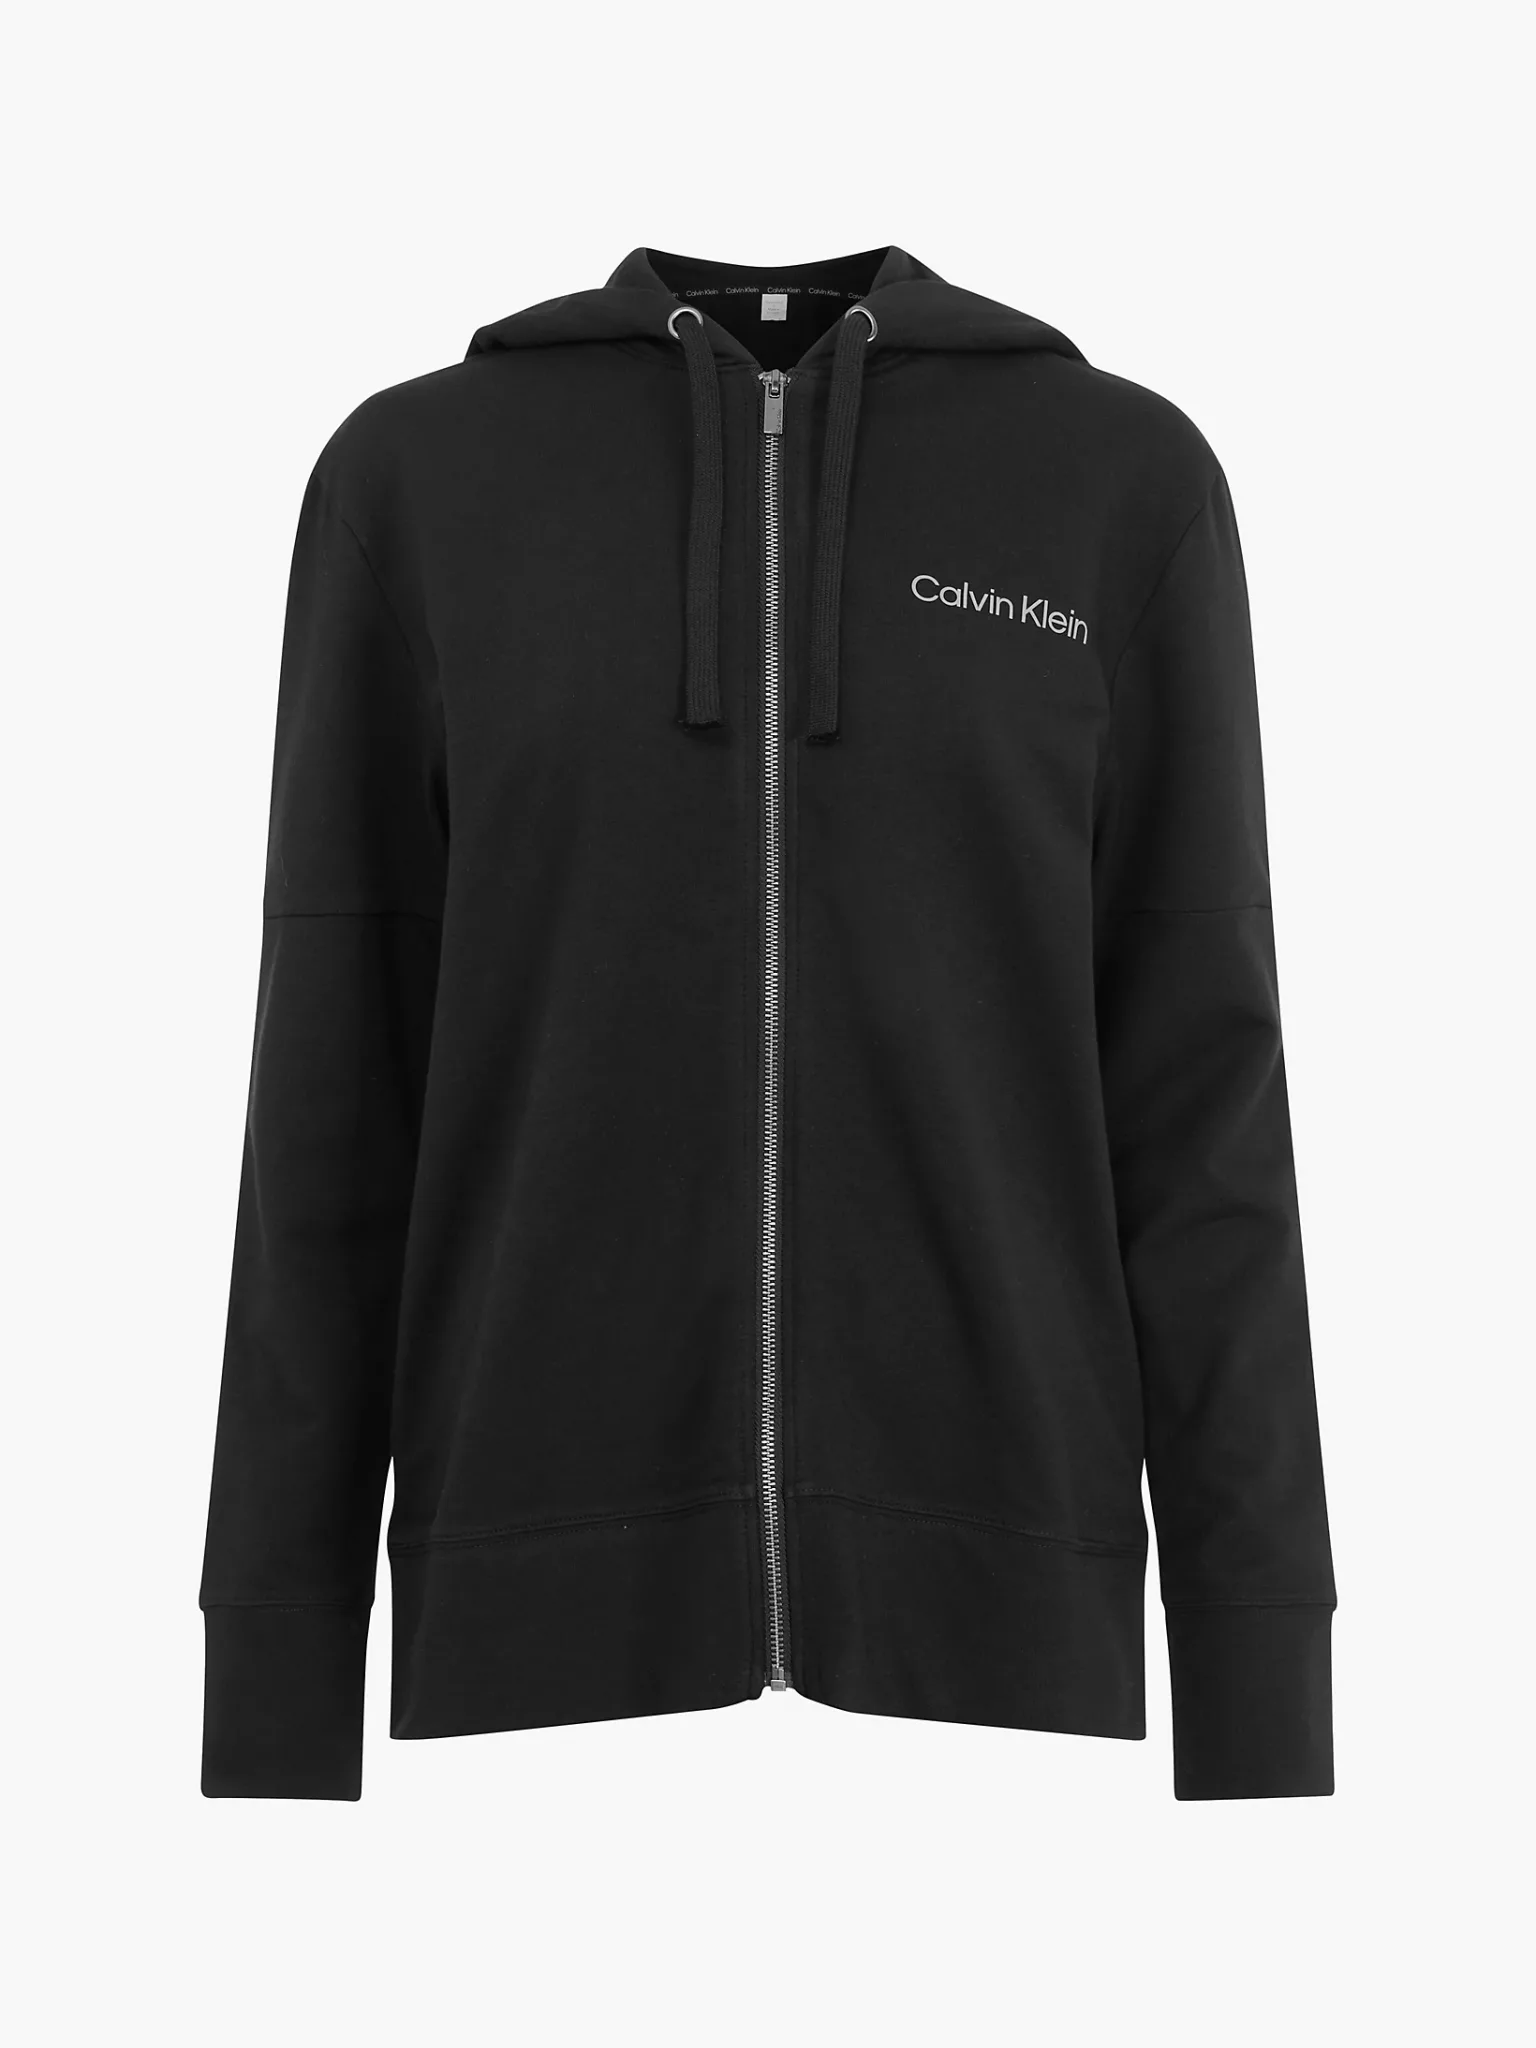 Buy Calvin Klein Lounge Zip Up Hoodie Black - Scandinavian Fashion Store